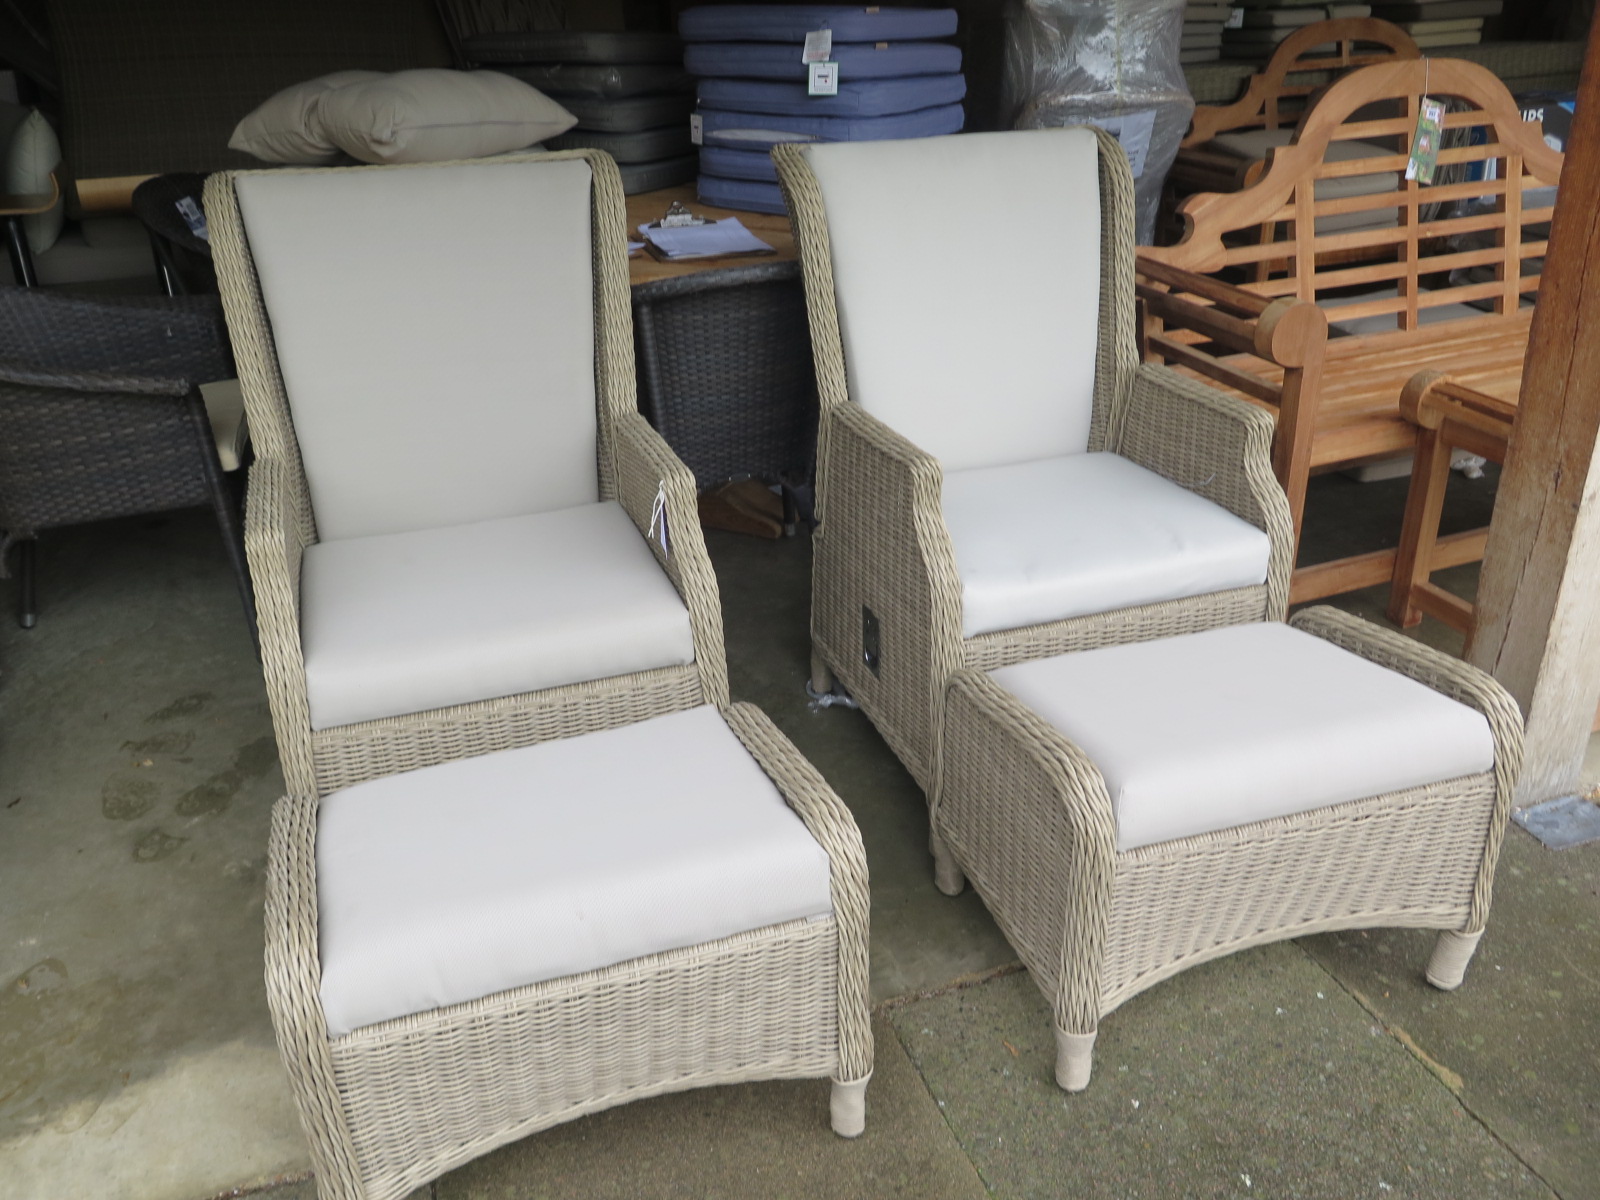 Two Bramblecrest Oakridge recliners with cushions,